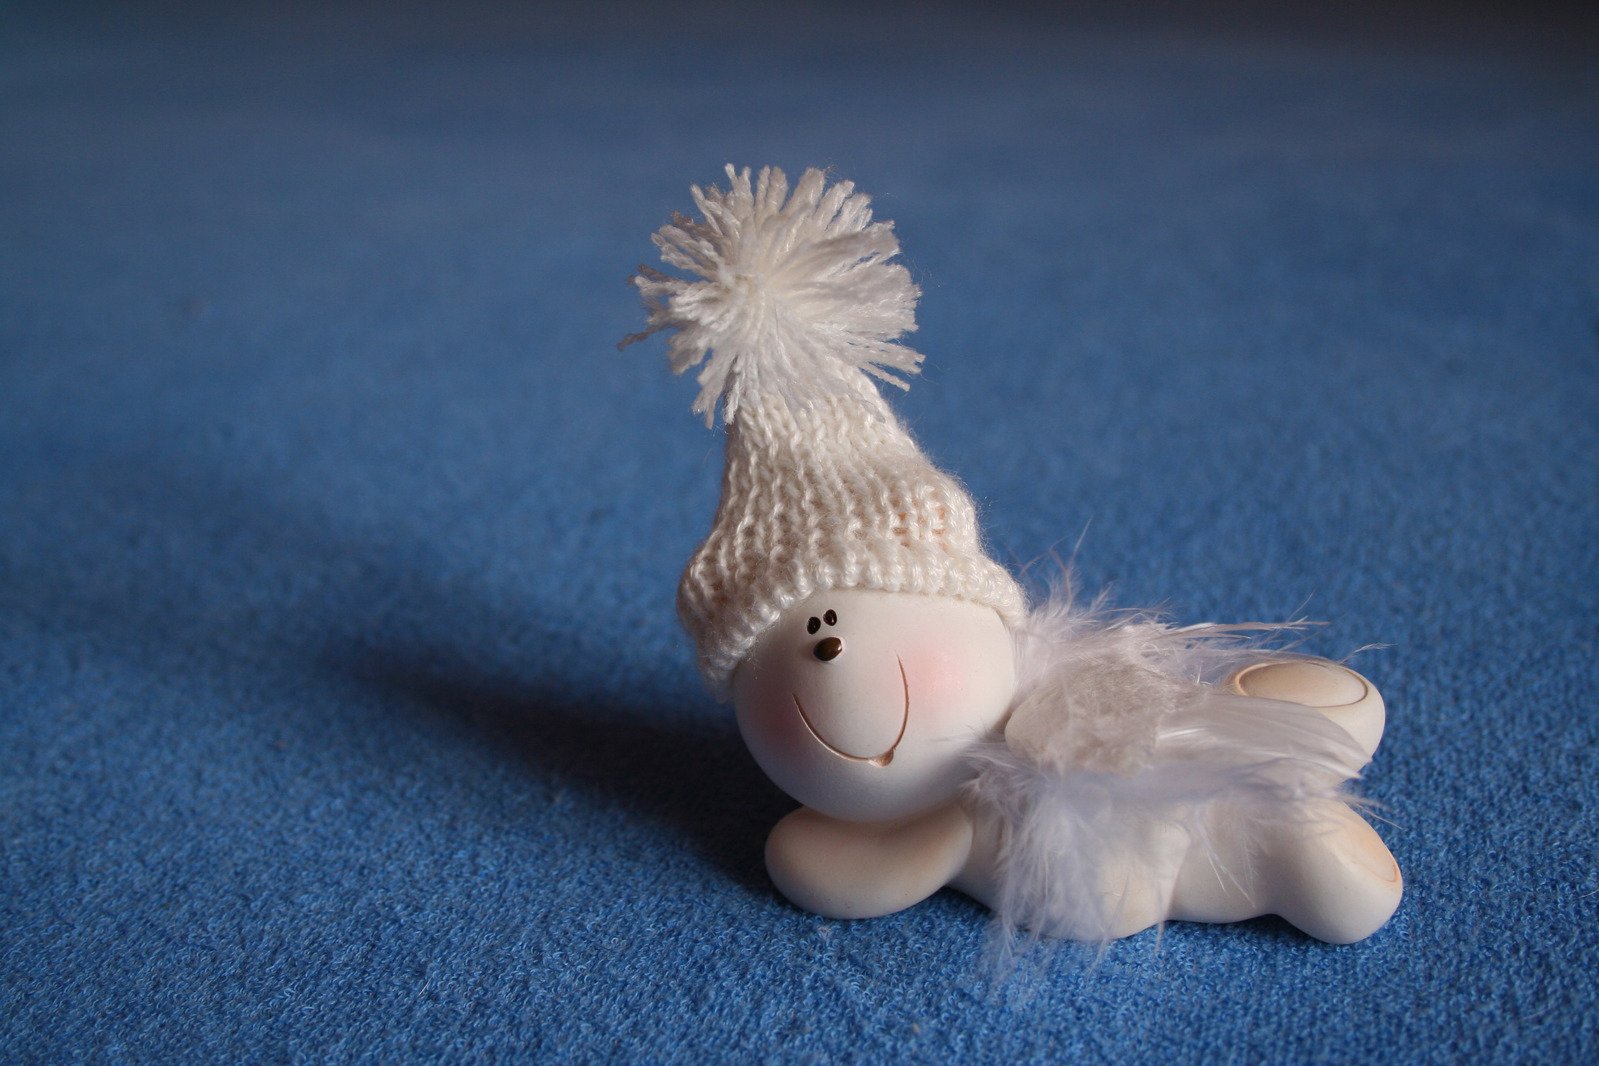 a white stuffed angel wearing a white hat